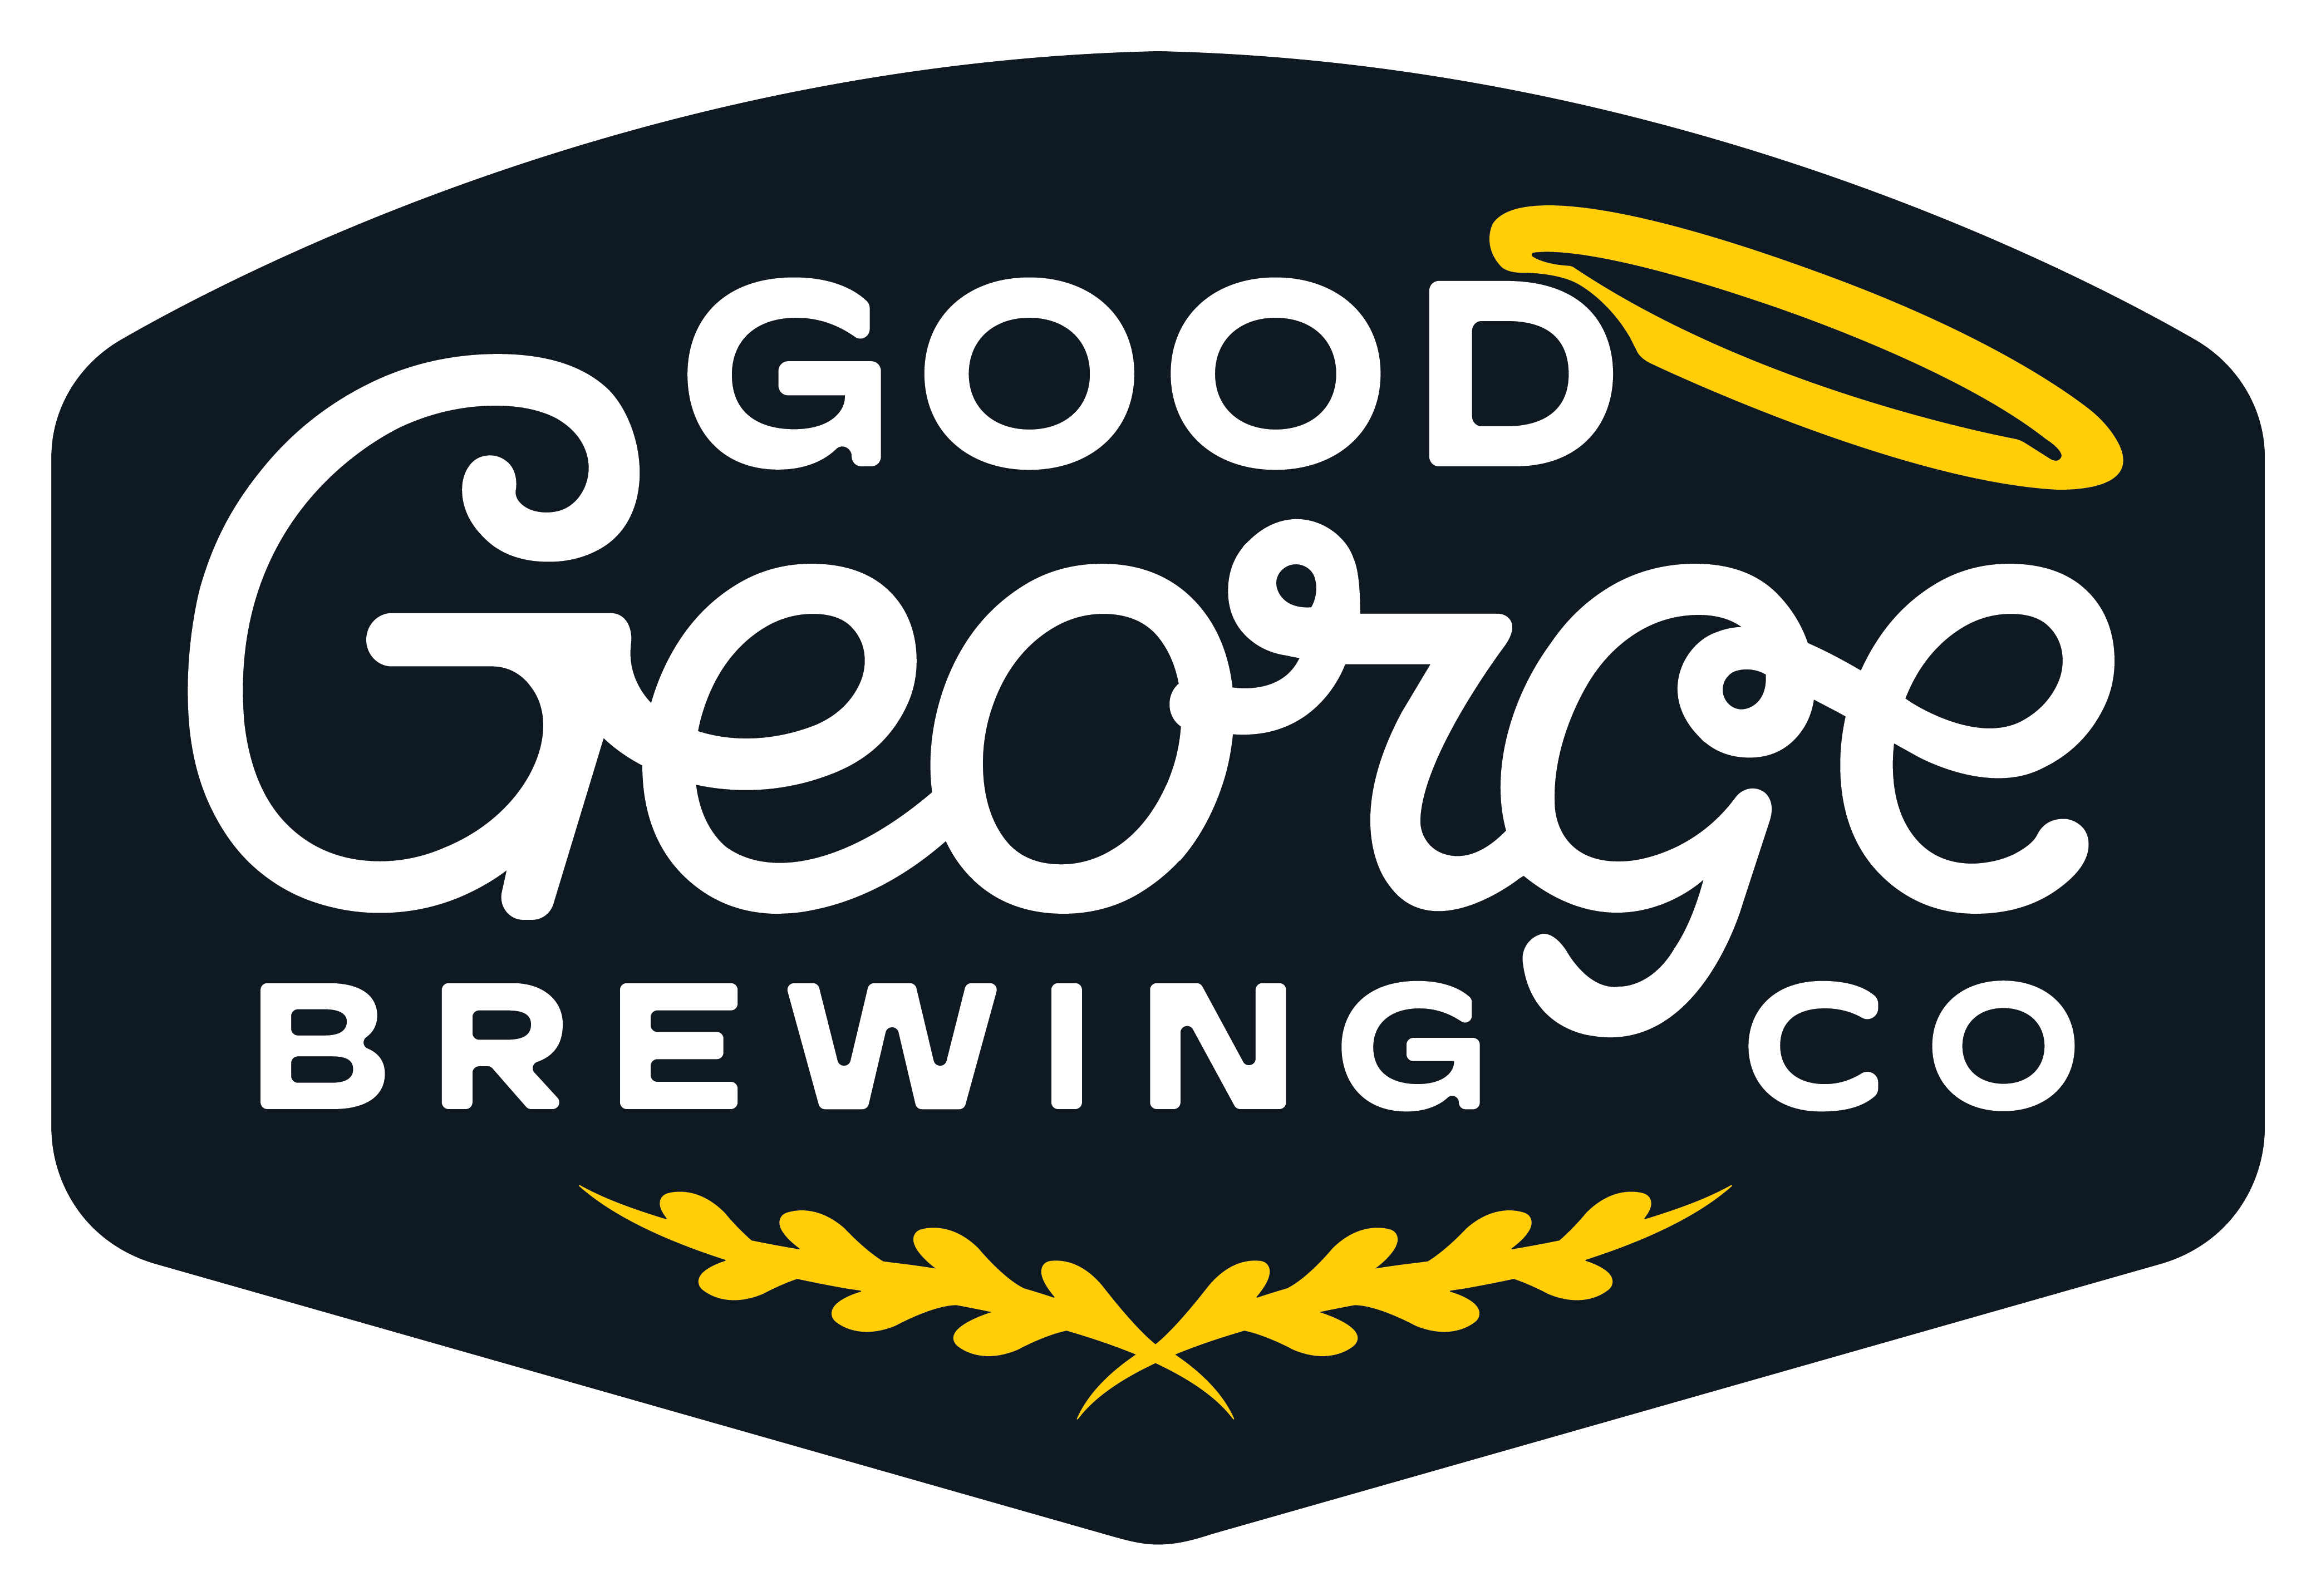 Good-George-logo.png